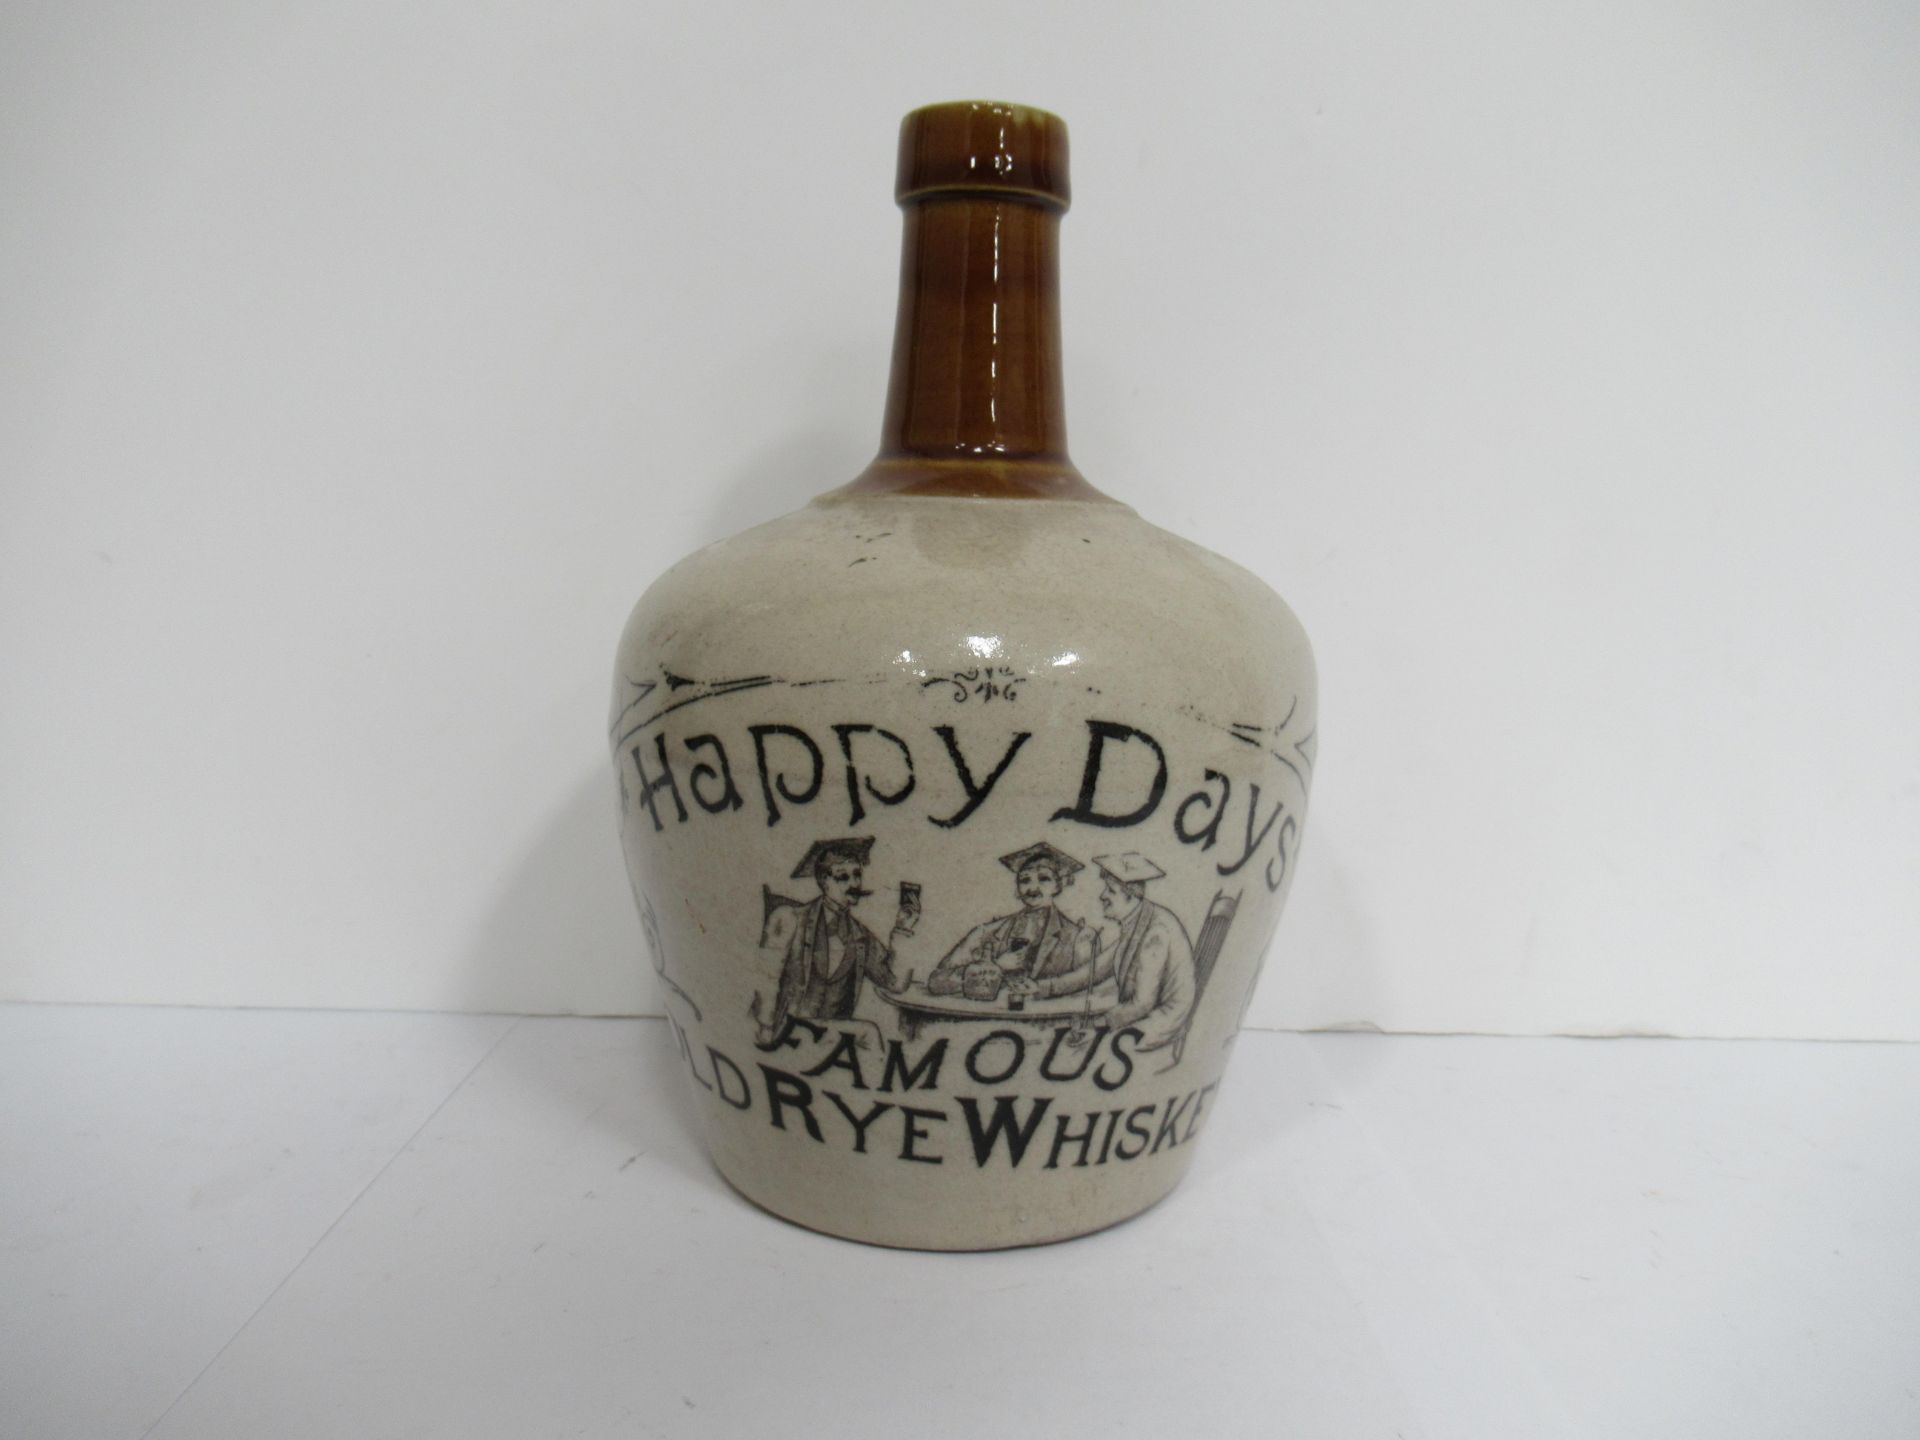 Happy Days Famous old rye whisky stone jug